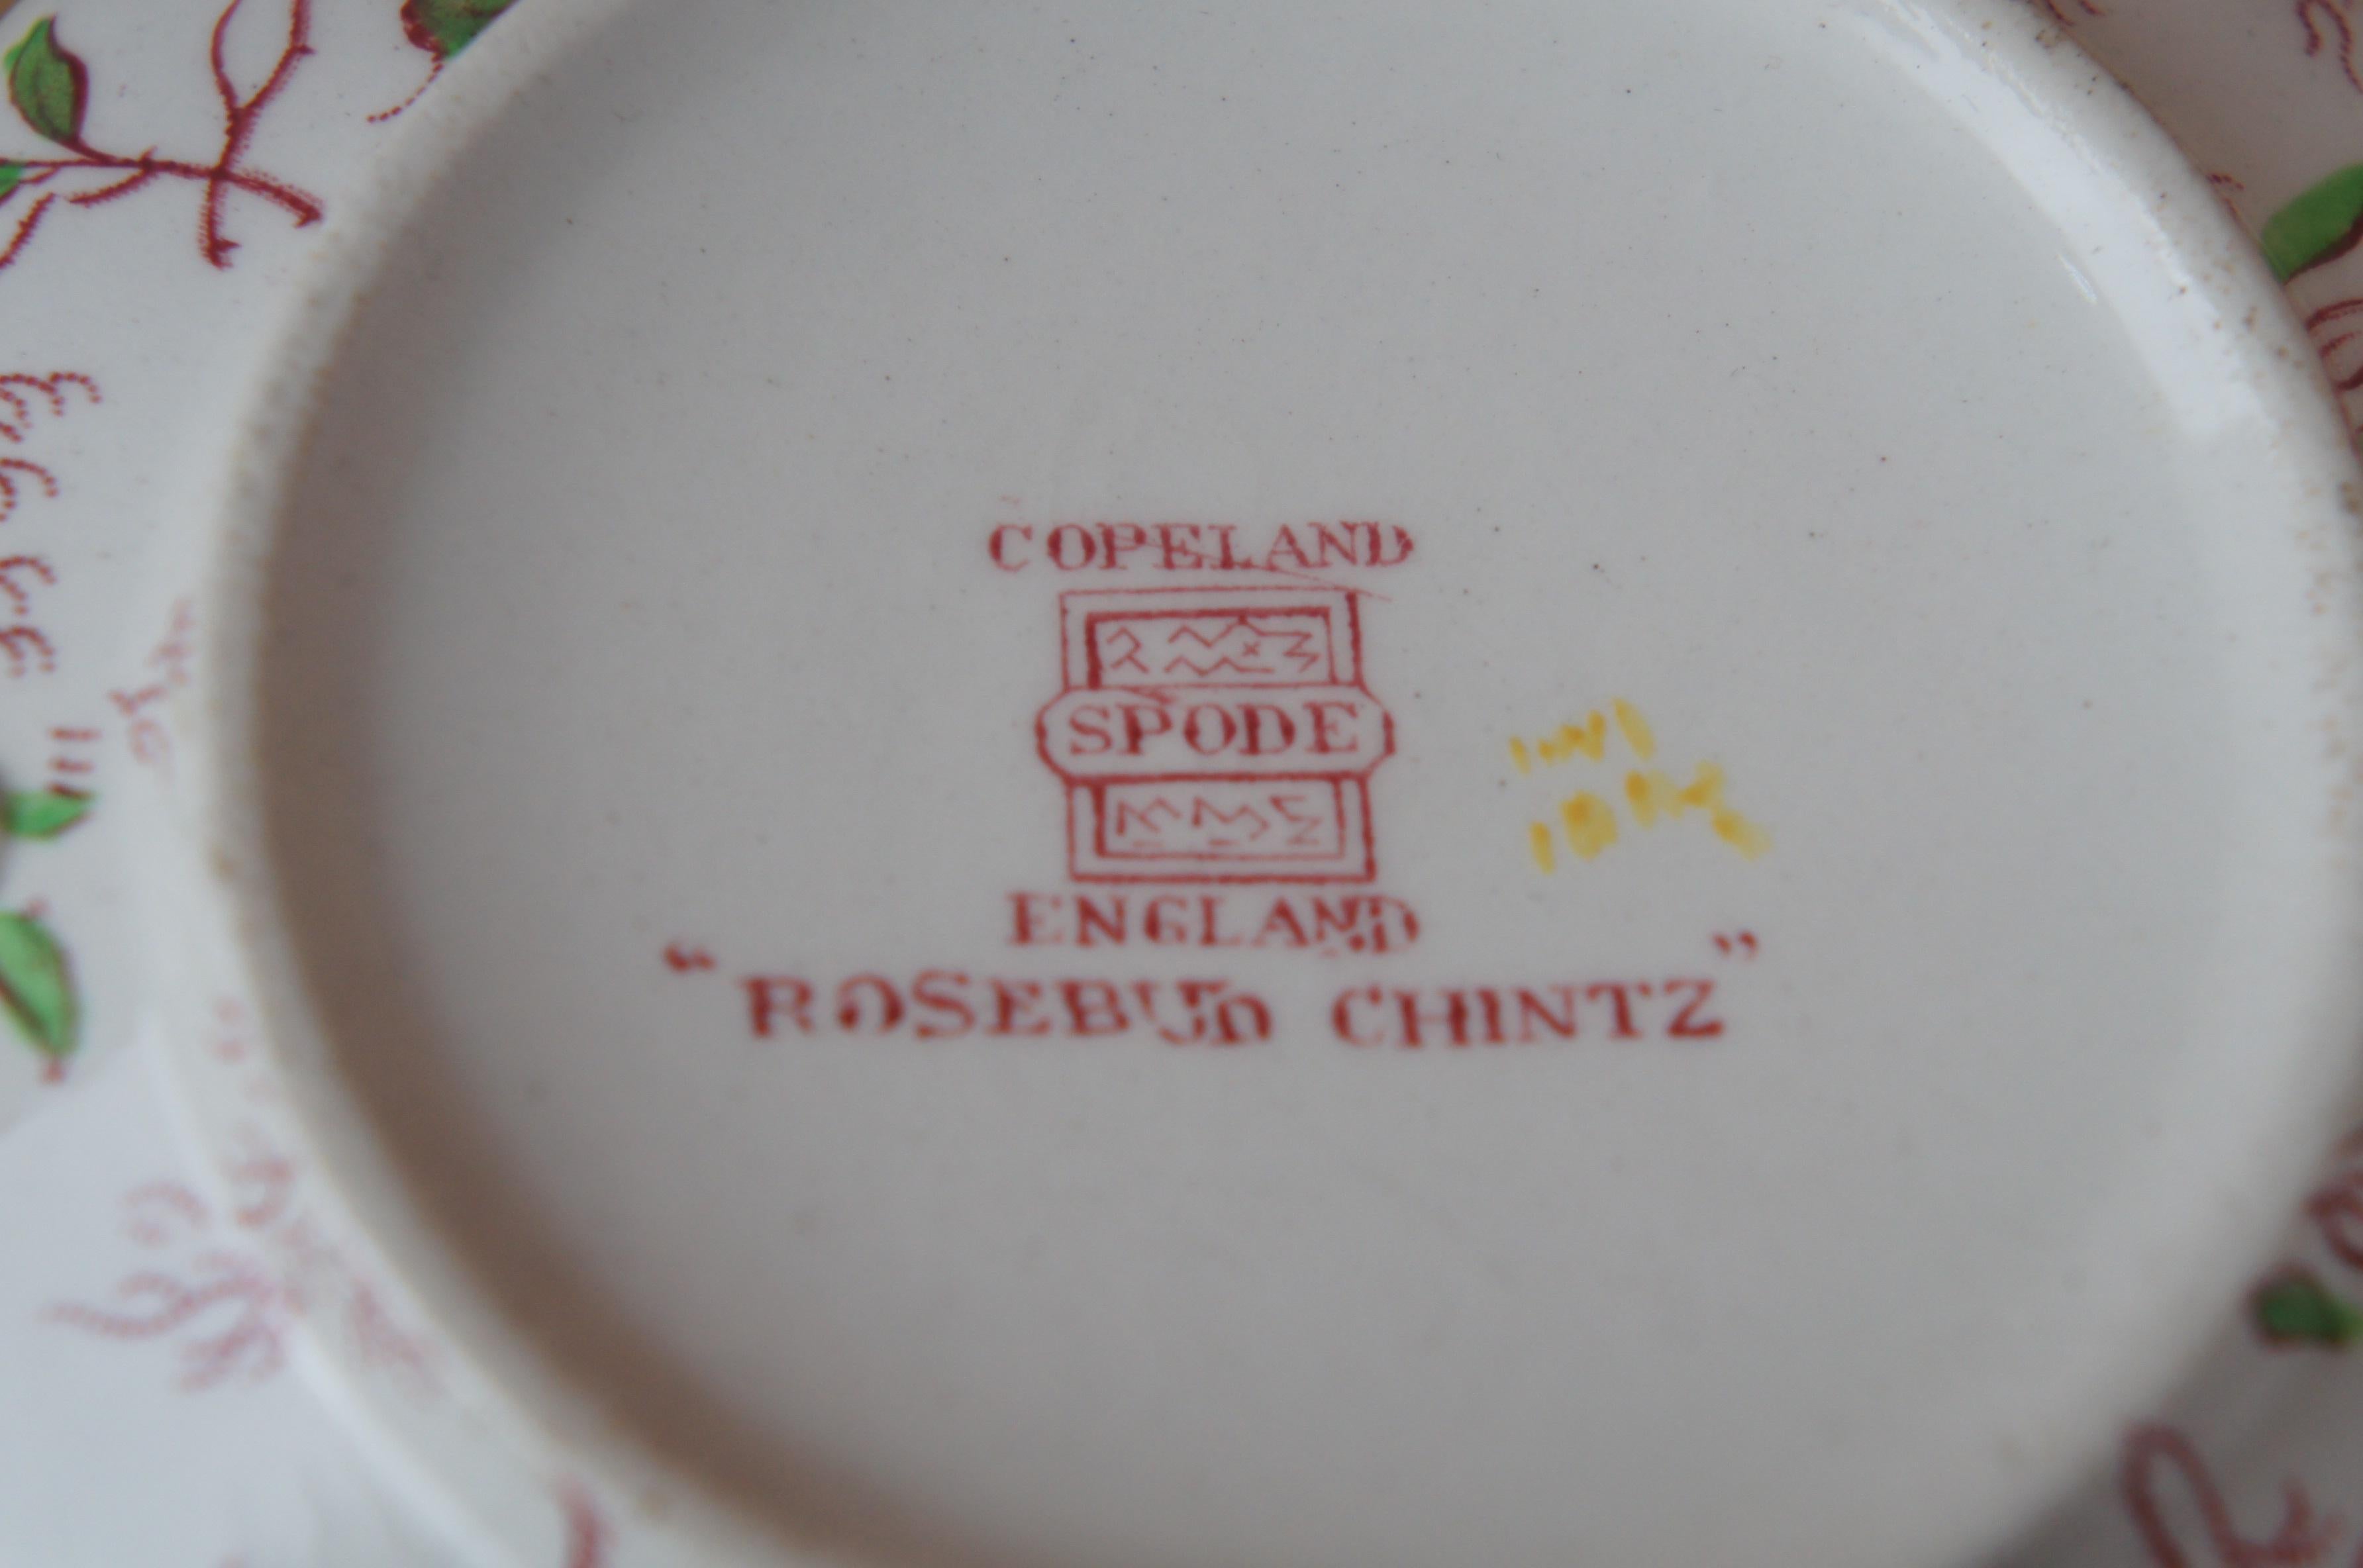 33 Pcs Vintage Copeland Rosebud Chintz Spode China Dinnerware England Floral 2